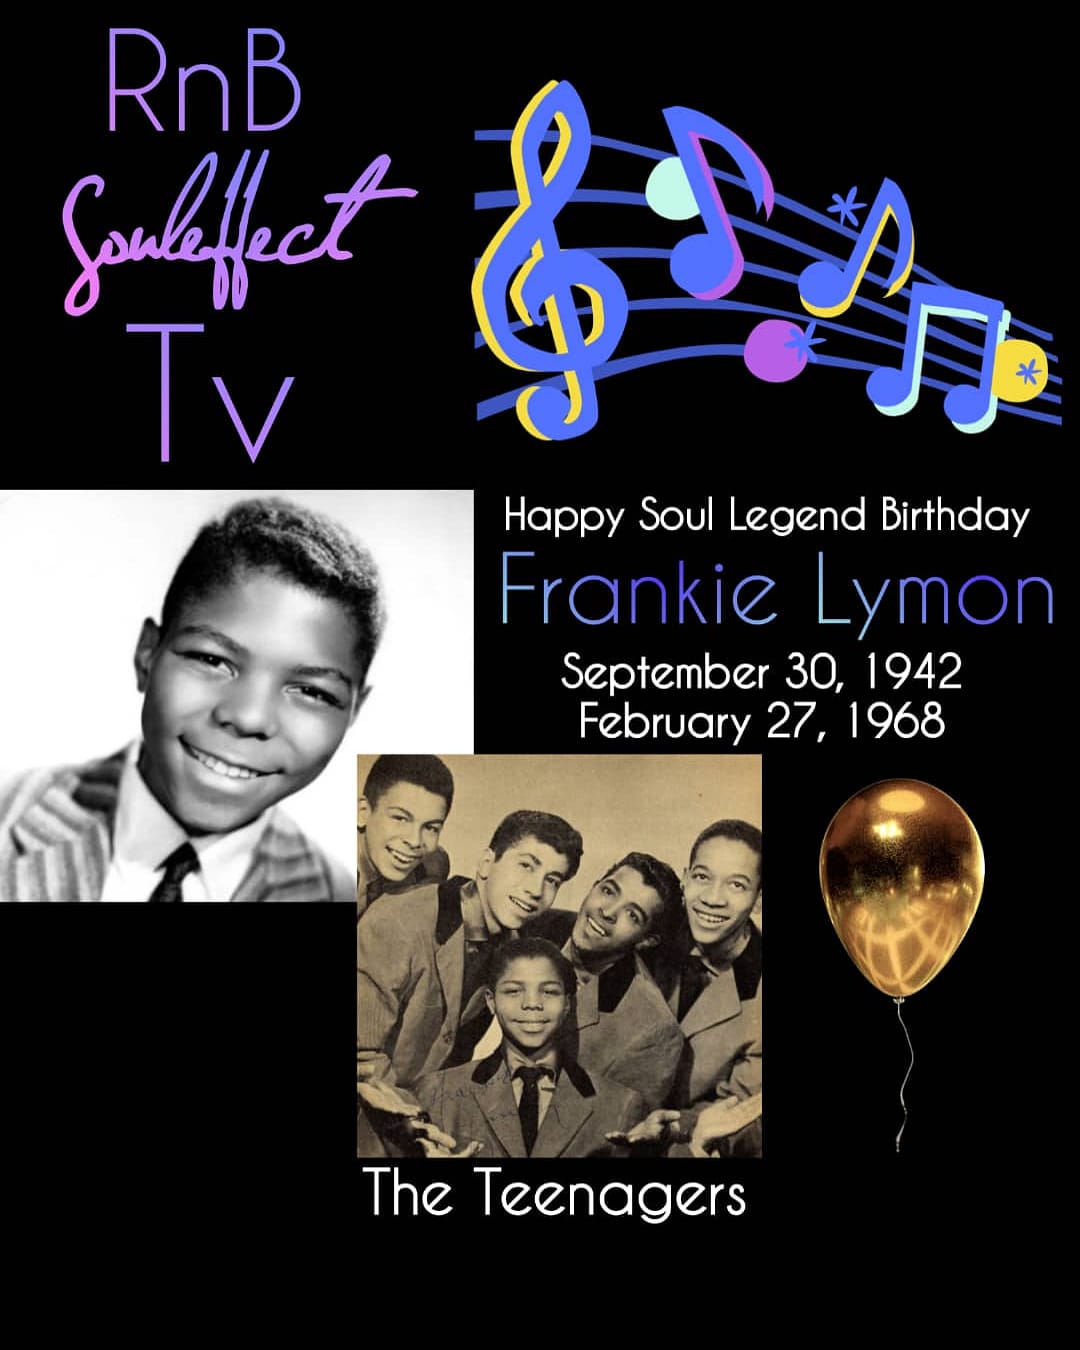 Happy Soul Legend Birthday
Frankie Lymon 